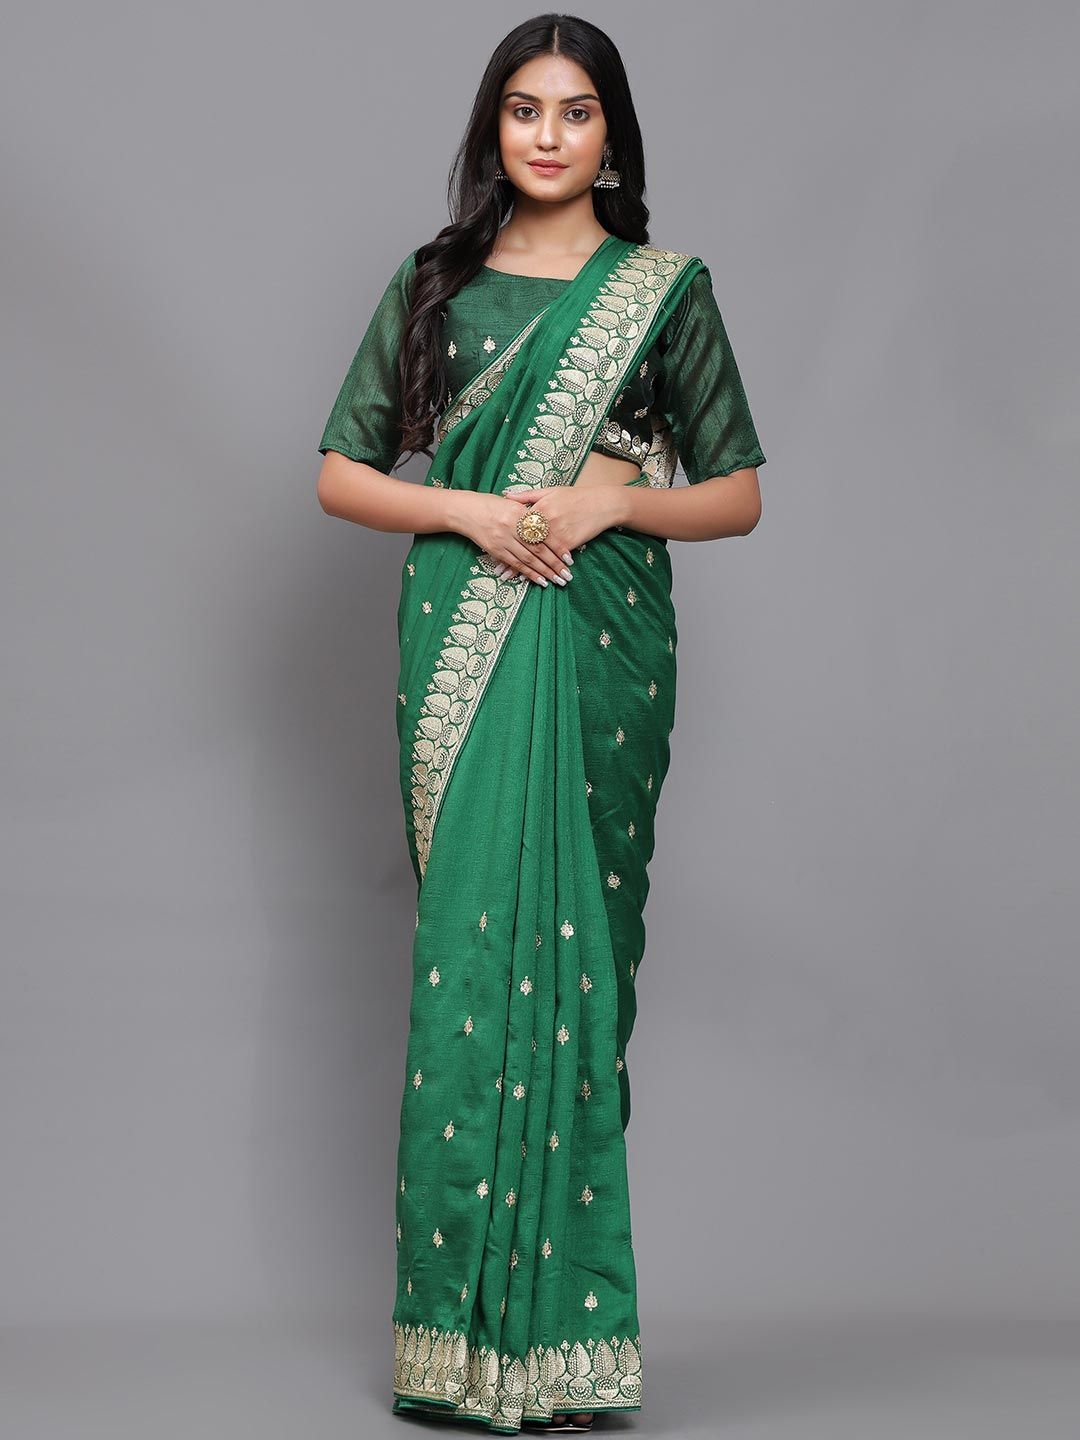 3BUDDY FASHION Green & Silver-Toned Woven Design Zari Jute Silk Venkatgiri Saree Price in India